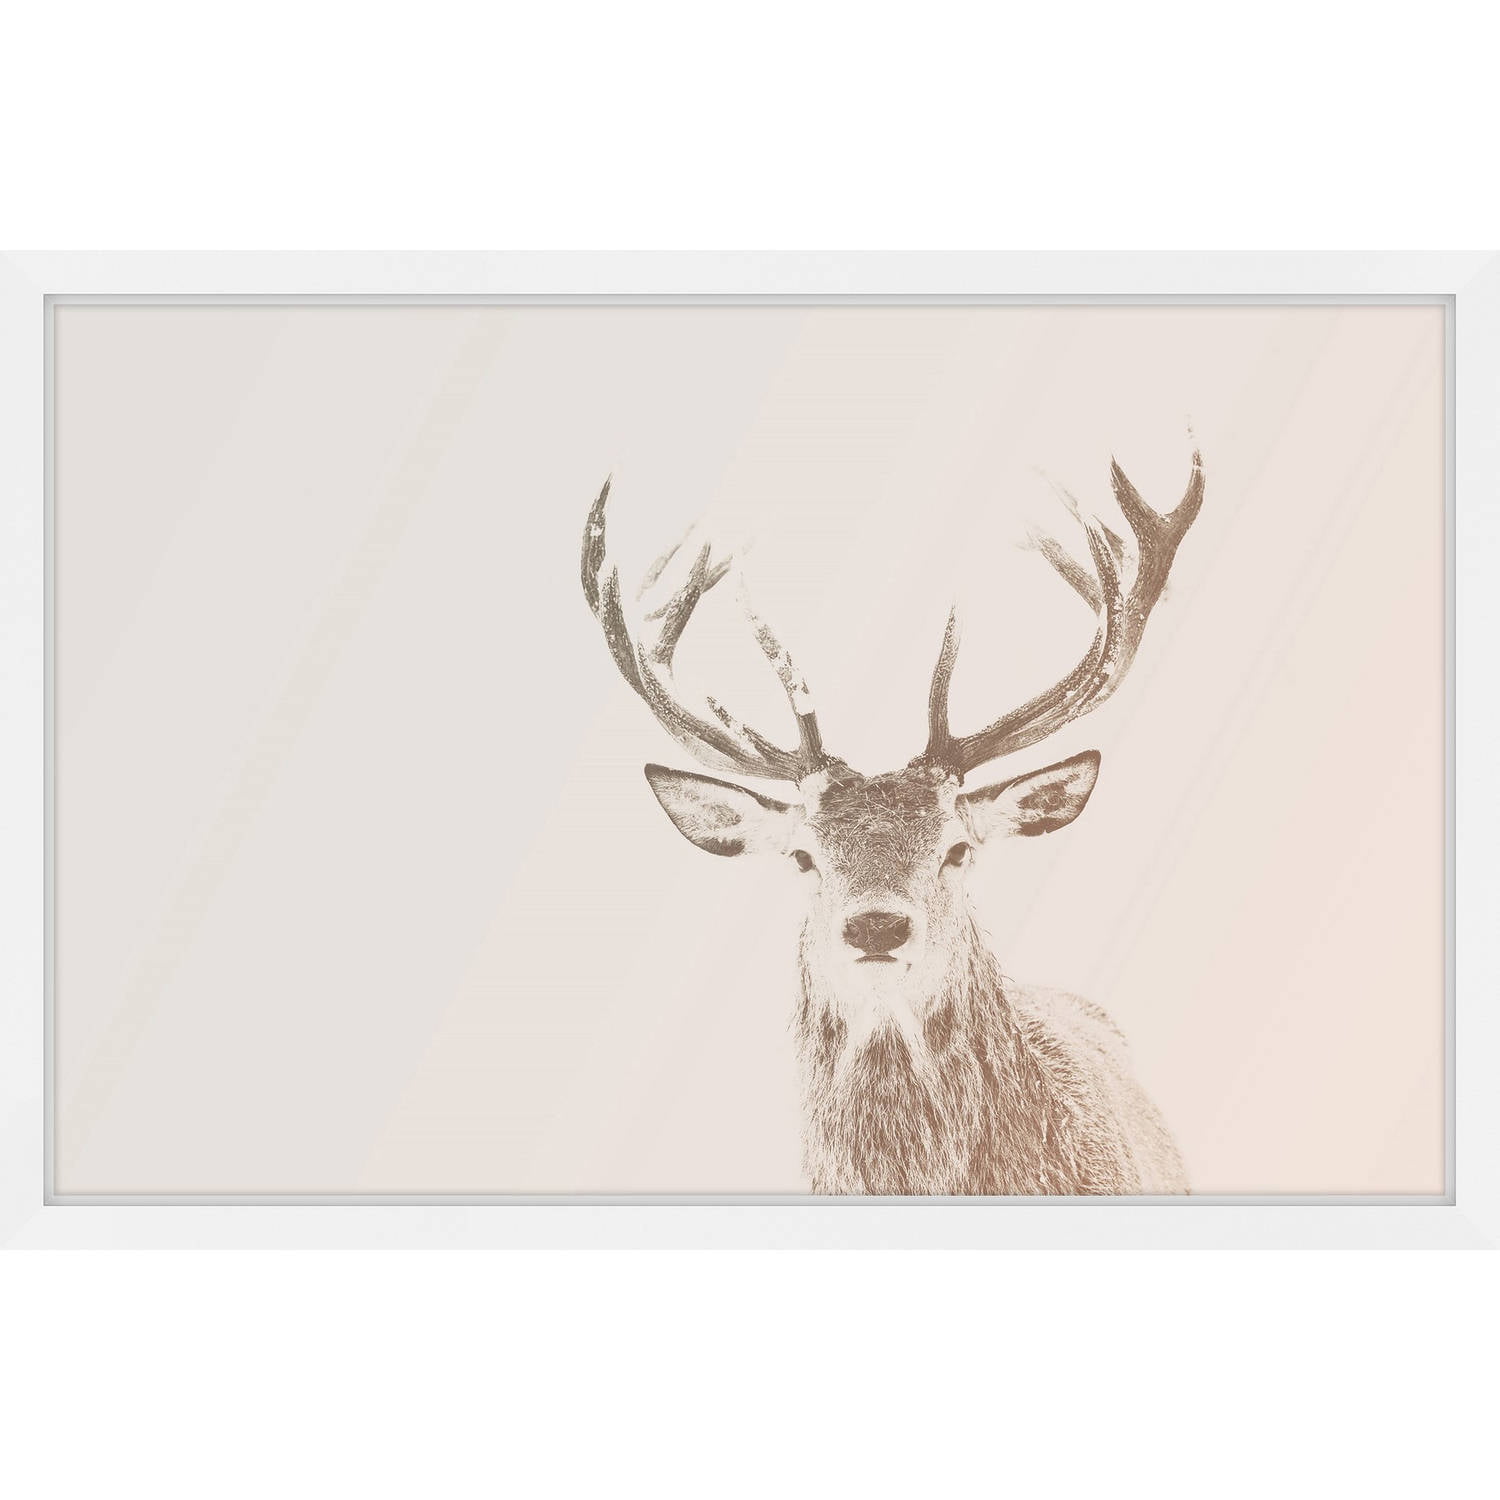 Elk Large Rack Stare Elk Poster Print Paper OR Wall Vinyl